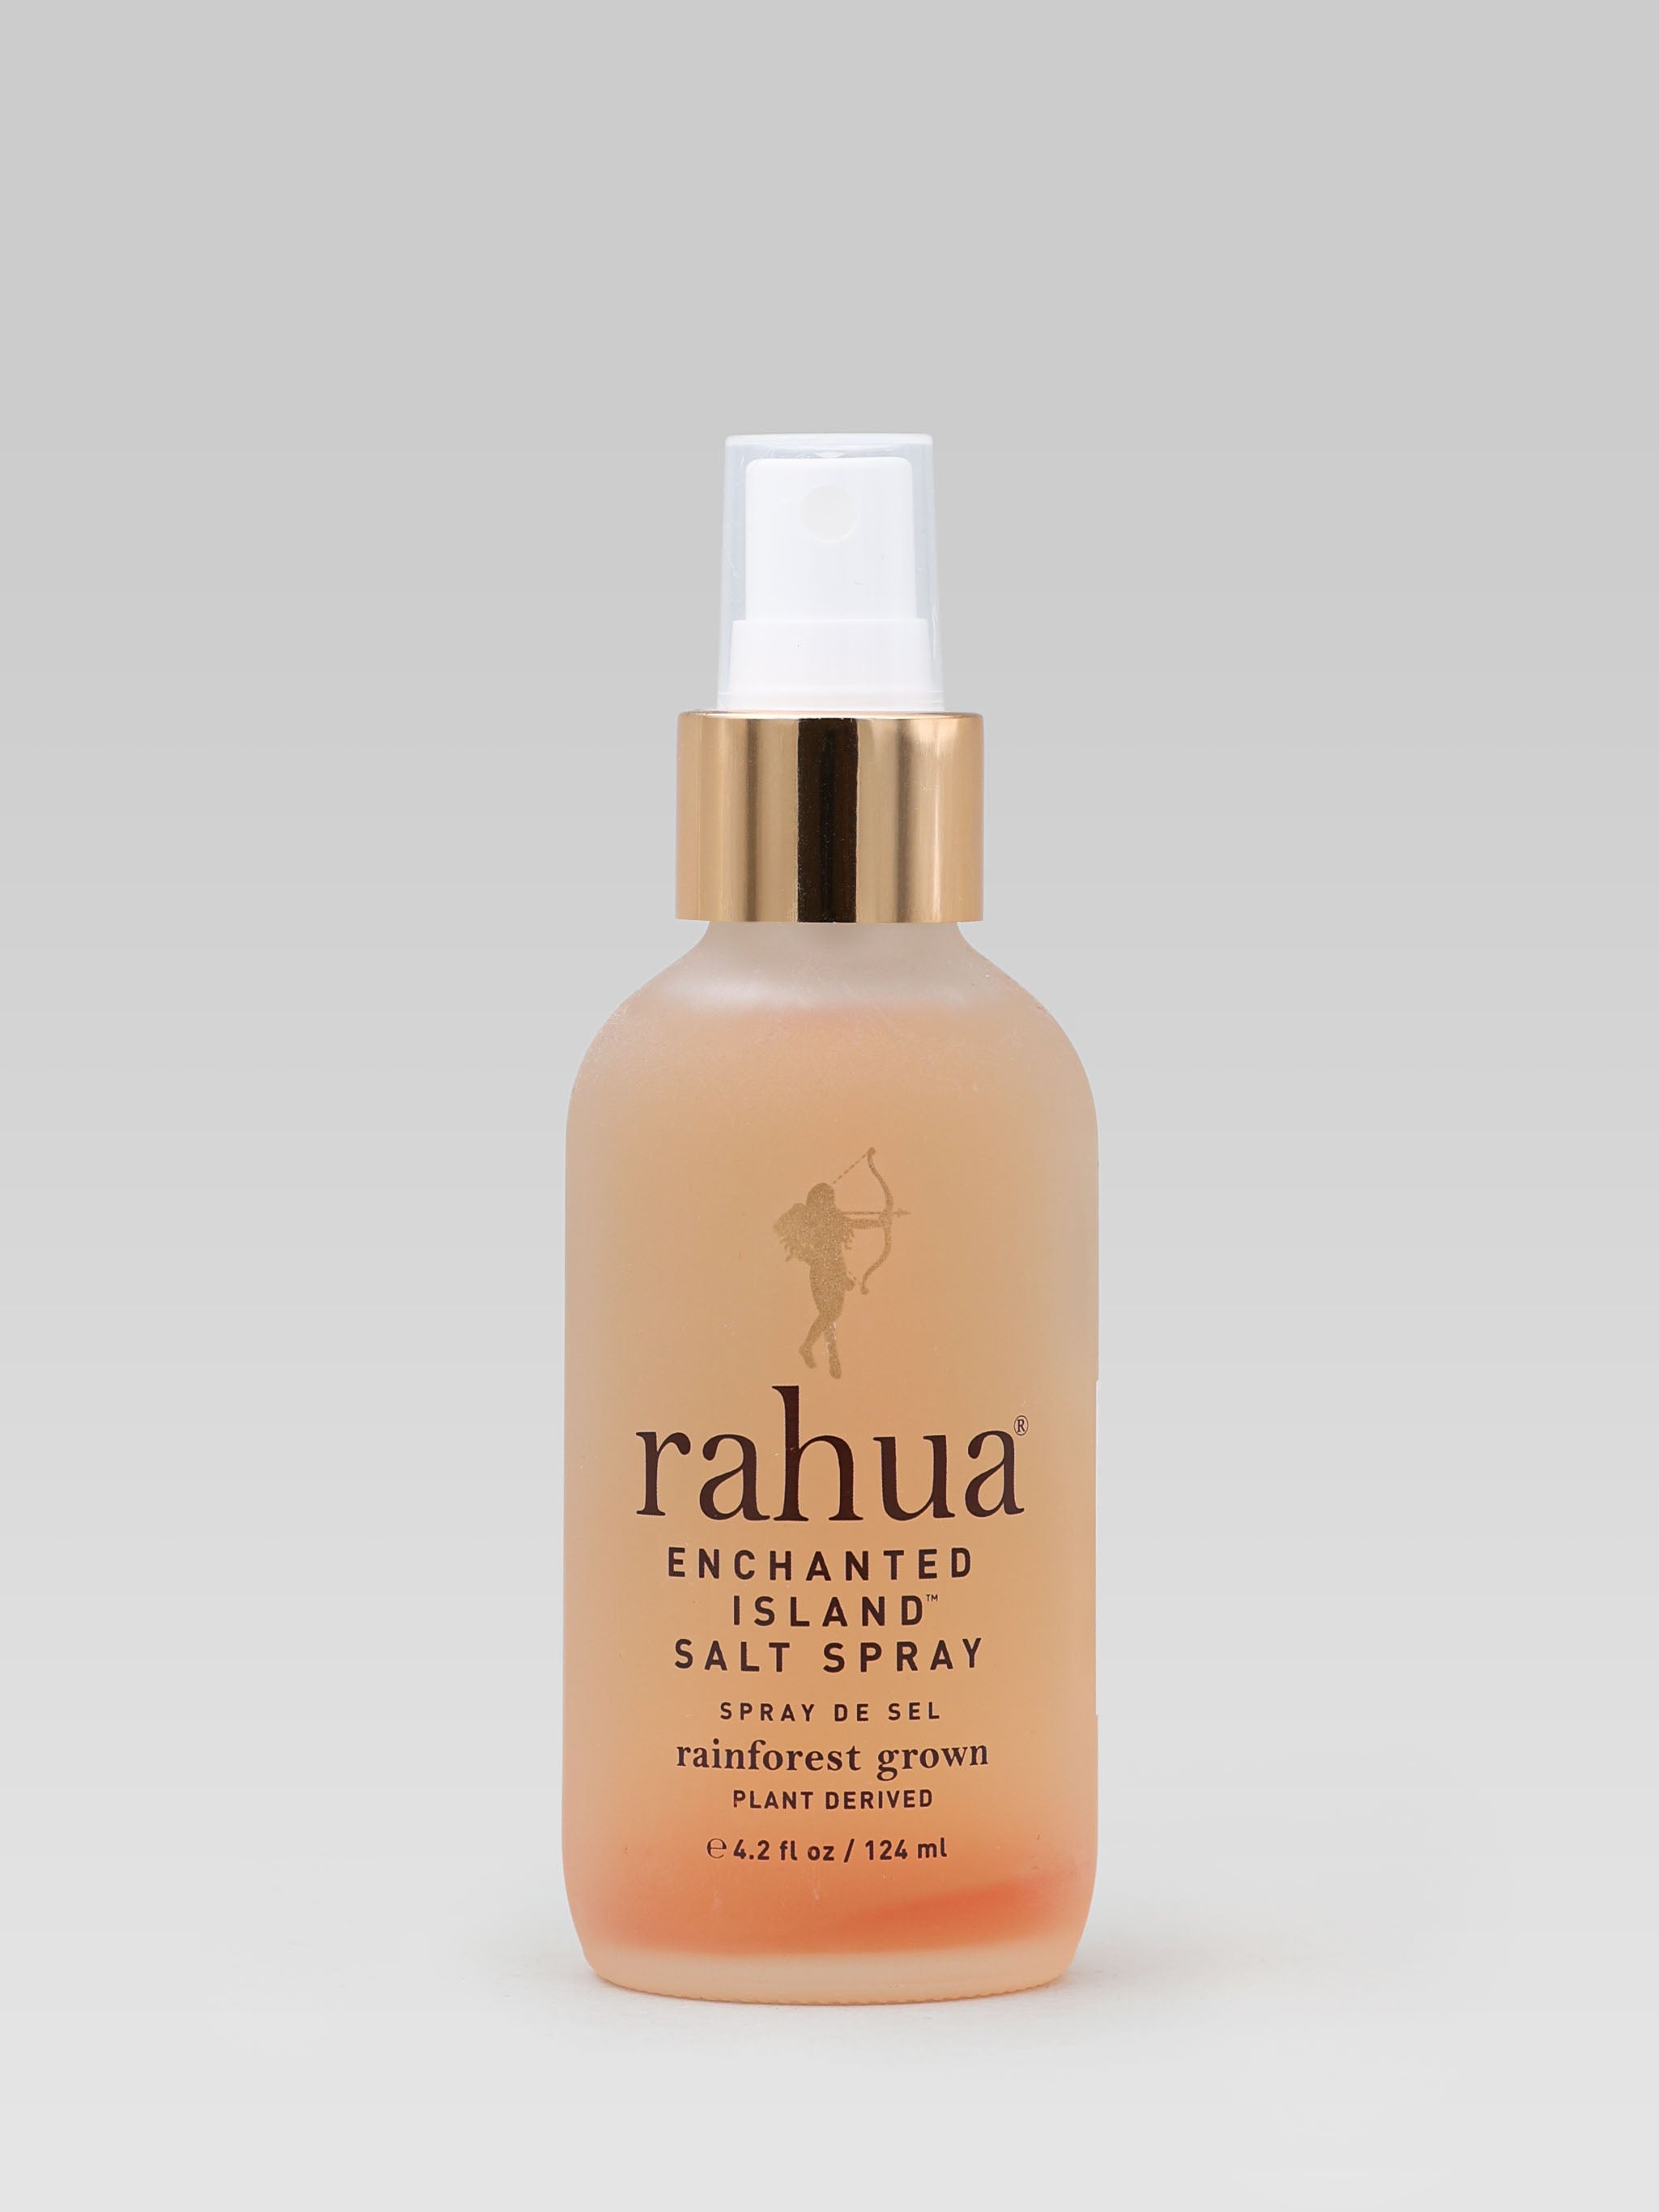 RAHUA Enchanted Island Salt Spray product shot 